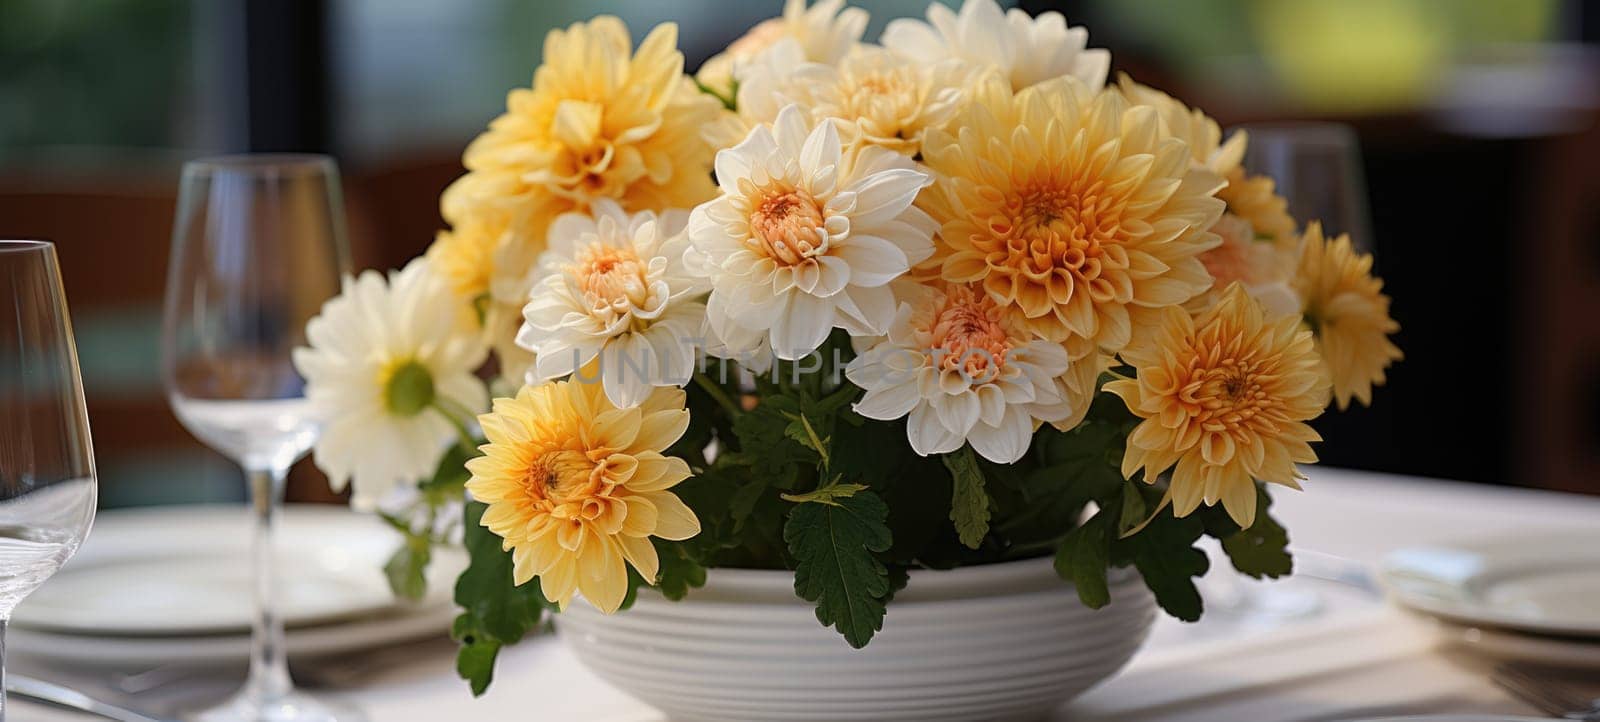 event table setting with chrysanthemum flower arrangement, ai